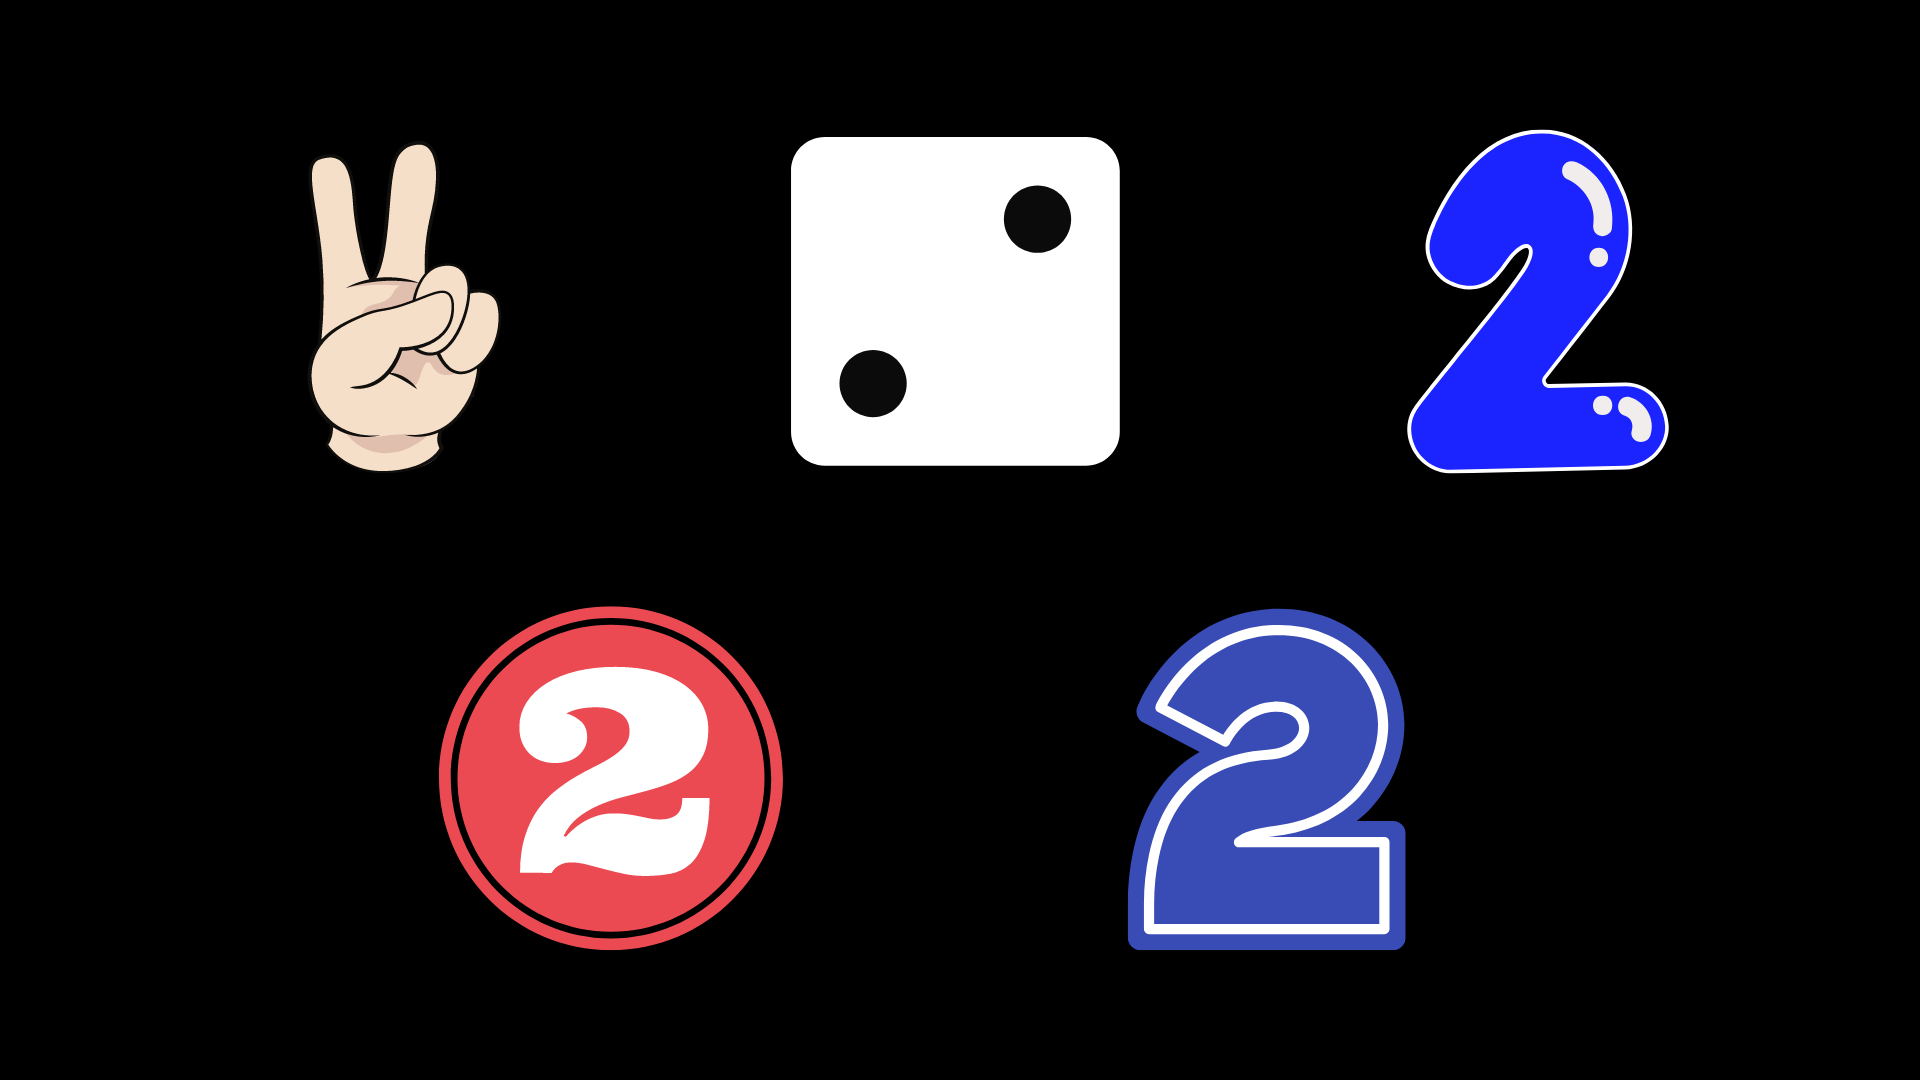 Symbols for 2